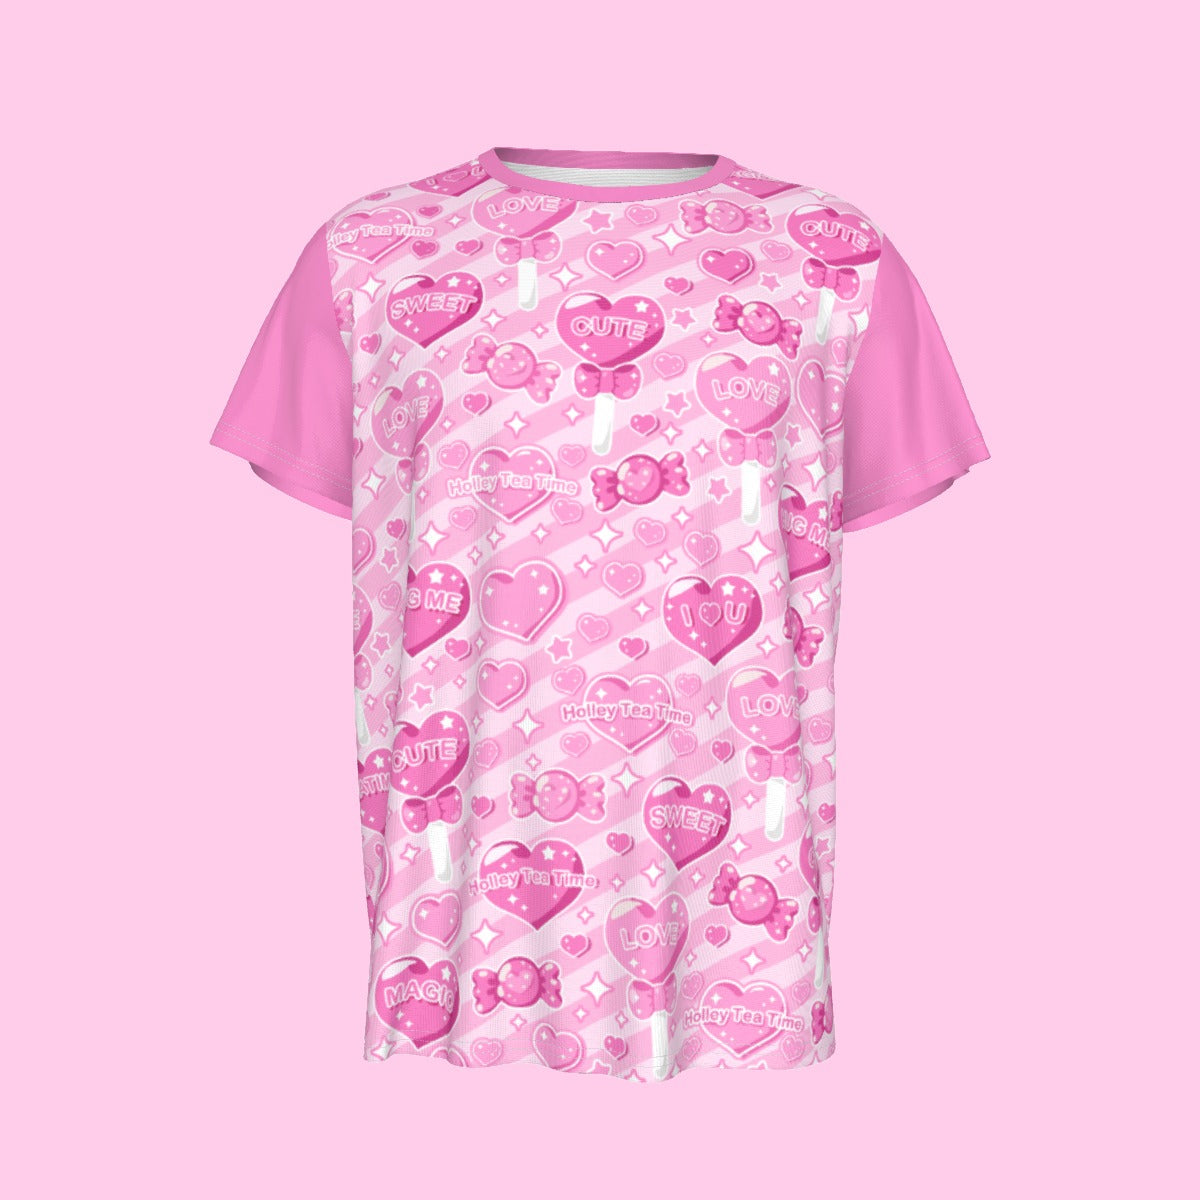 Candy Love Hearts (Pink Cutie) Men's Round Neck Short Sleeve T-Shirt